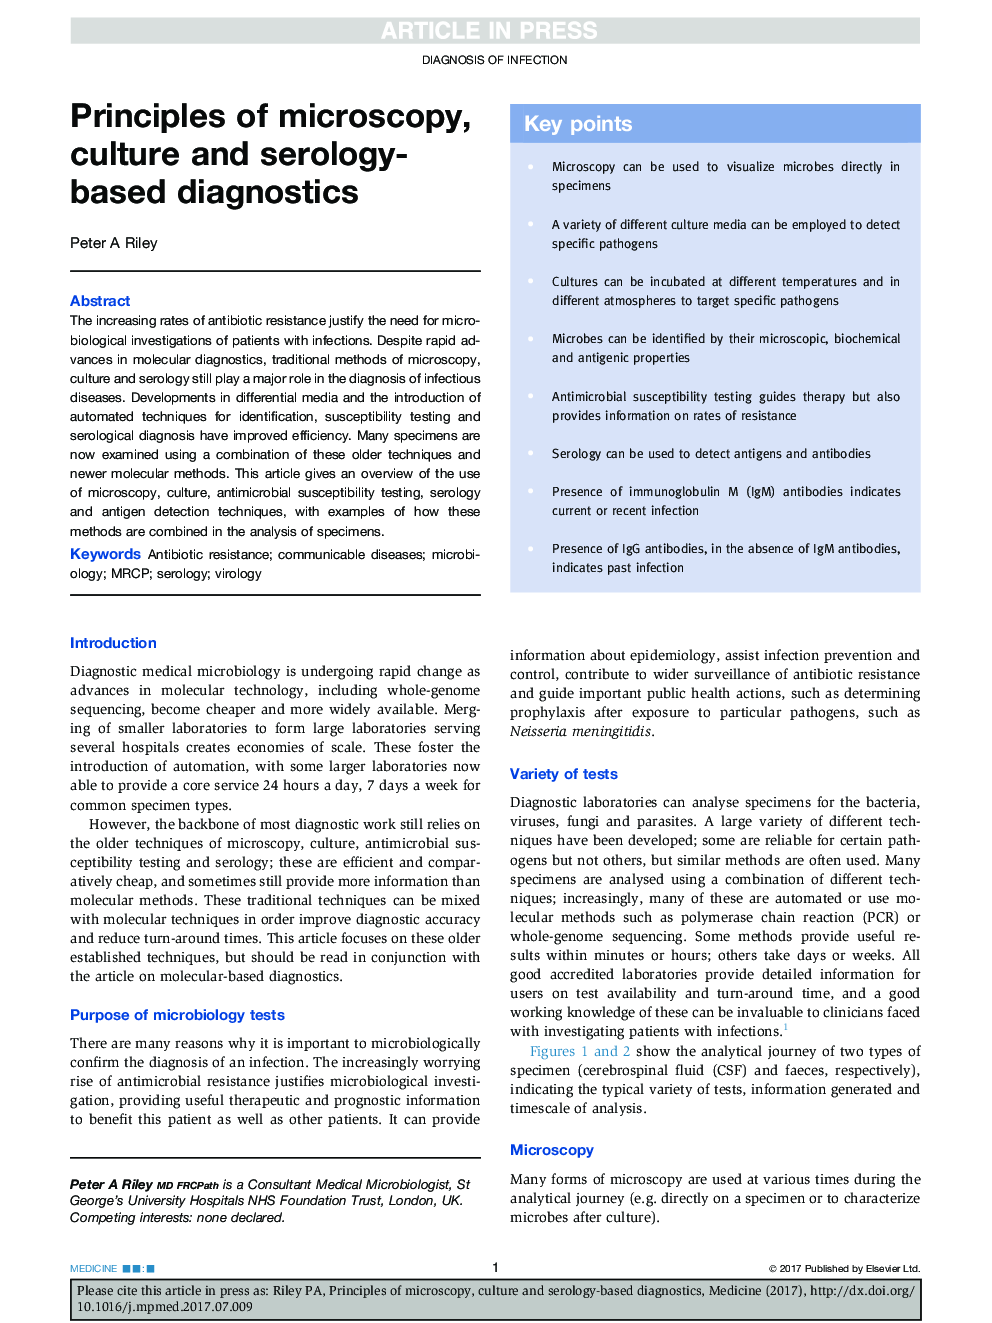 Principles of microscopy, culture and serology-based diagnostics